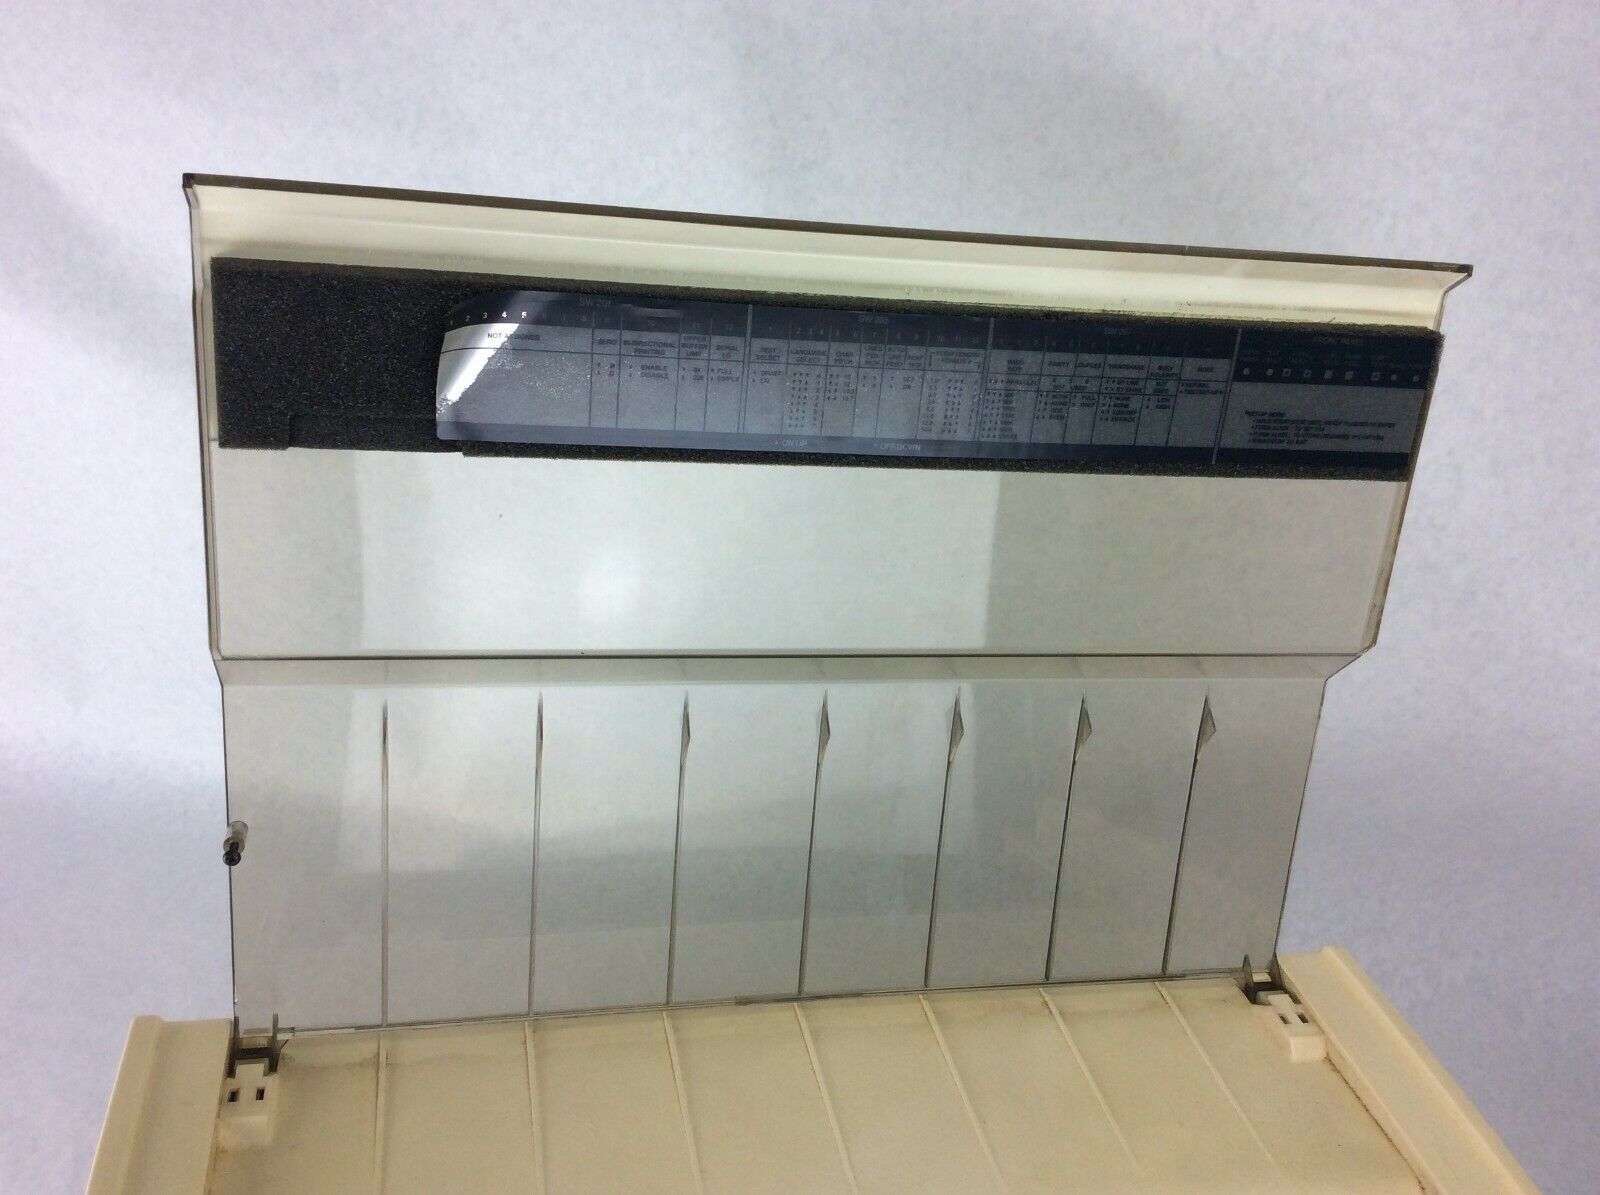 Printek Model 920 Dot Matrix Printer Serial